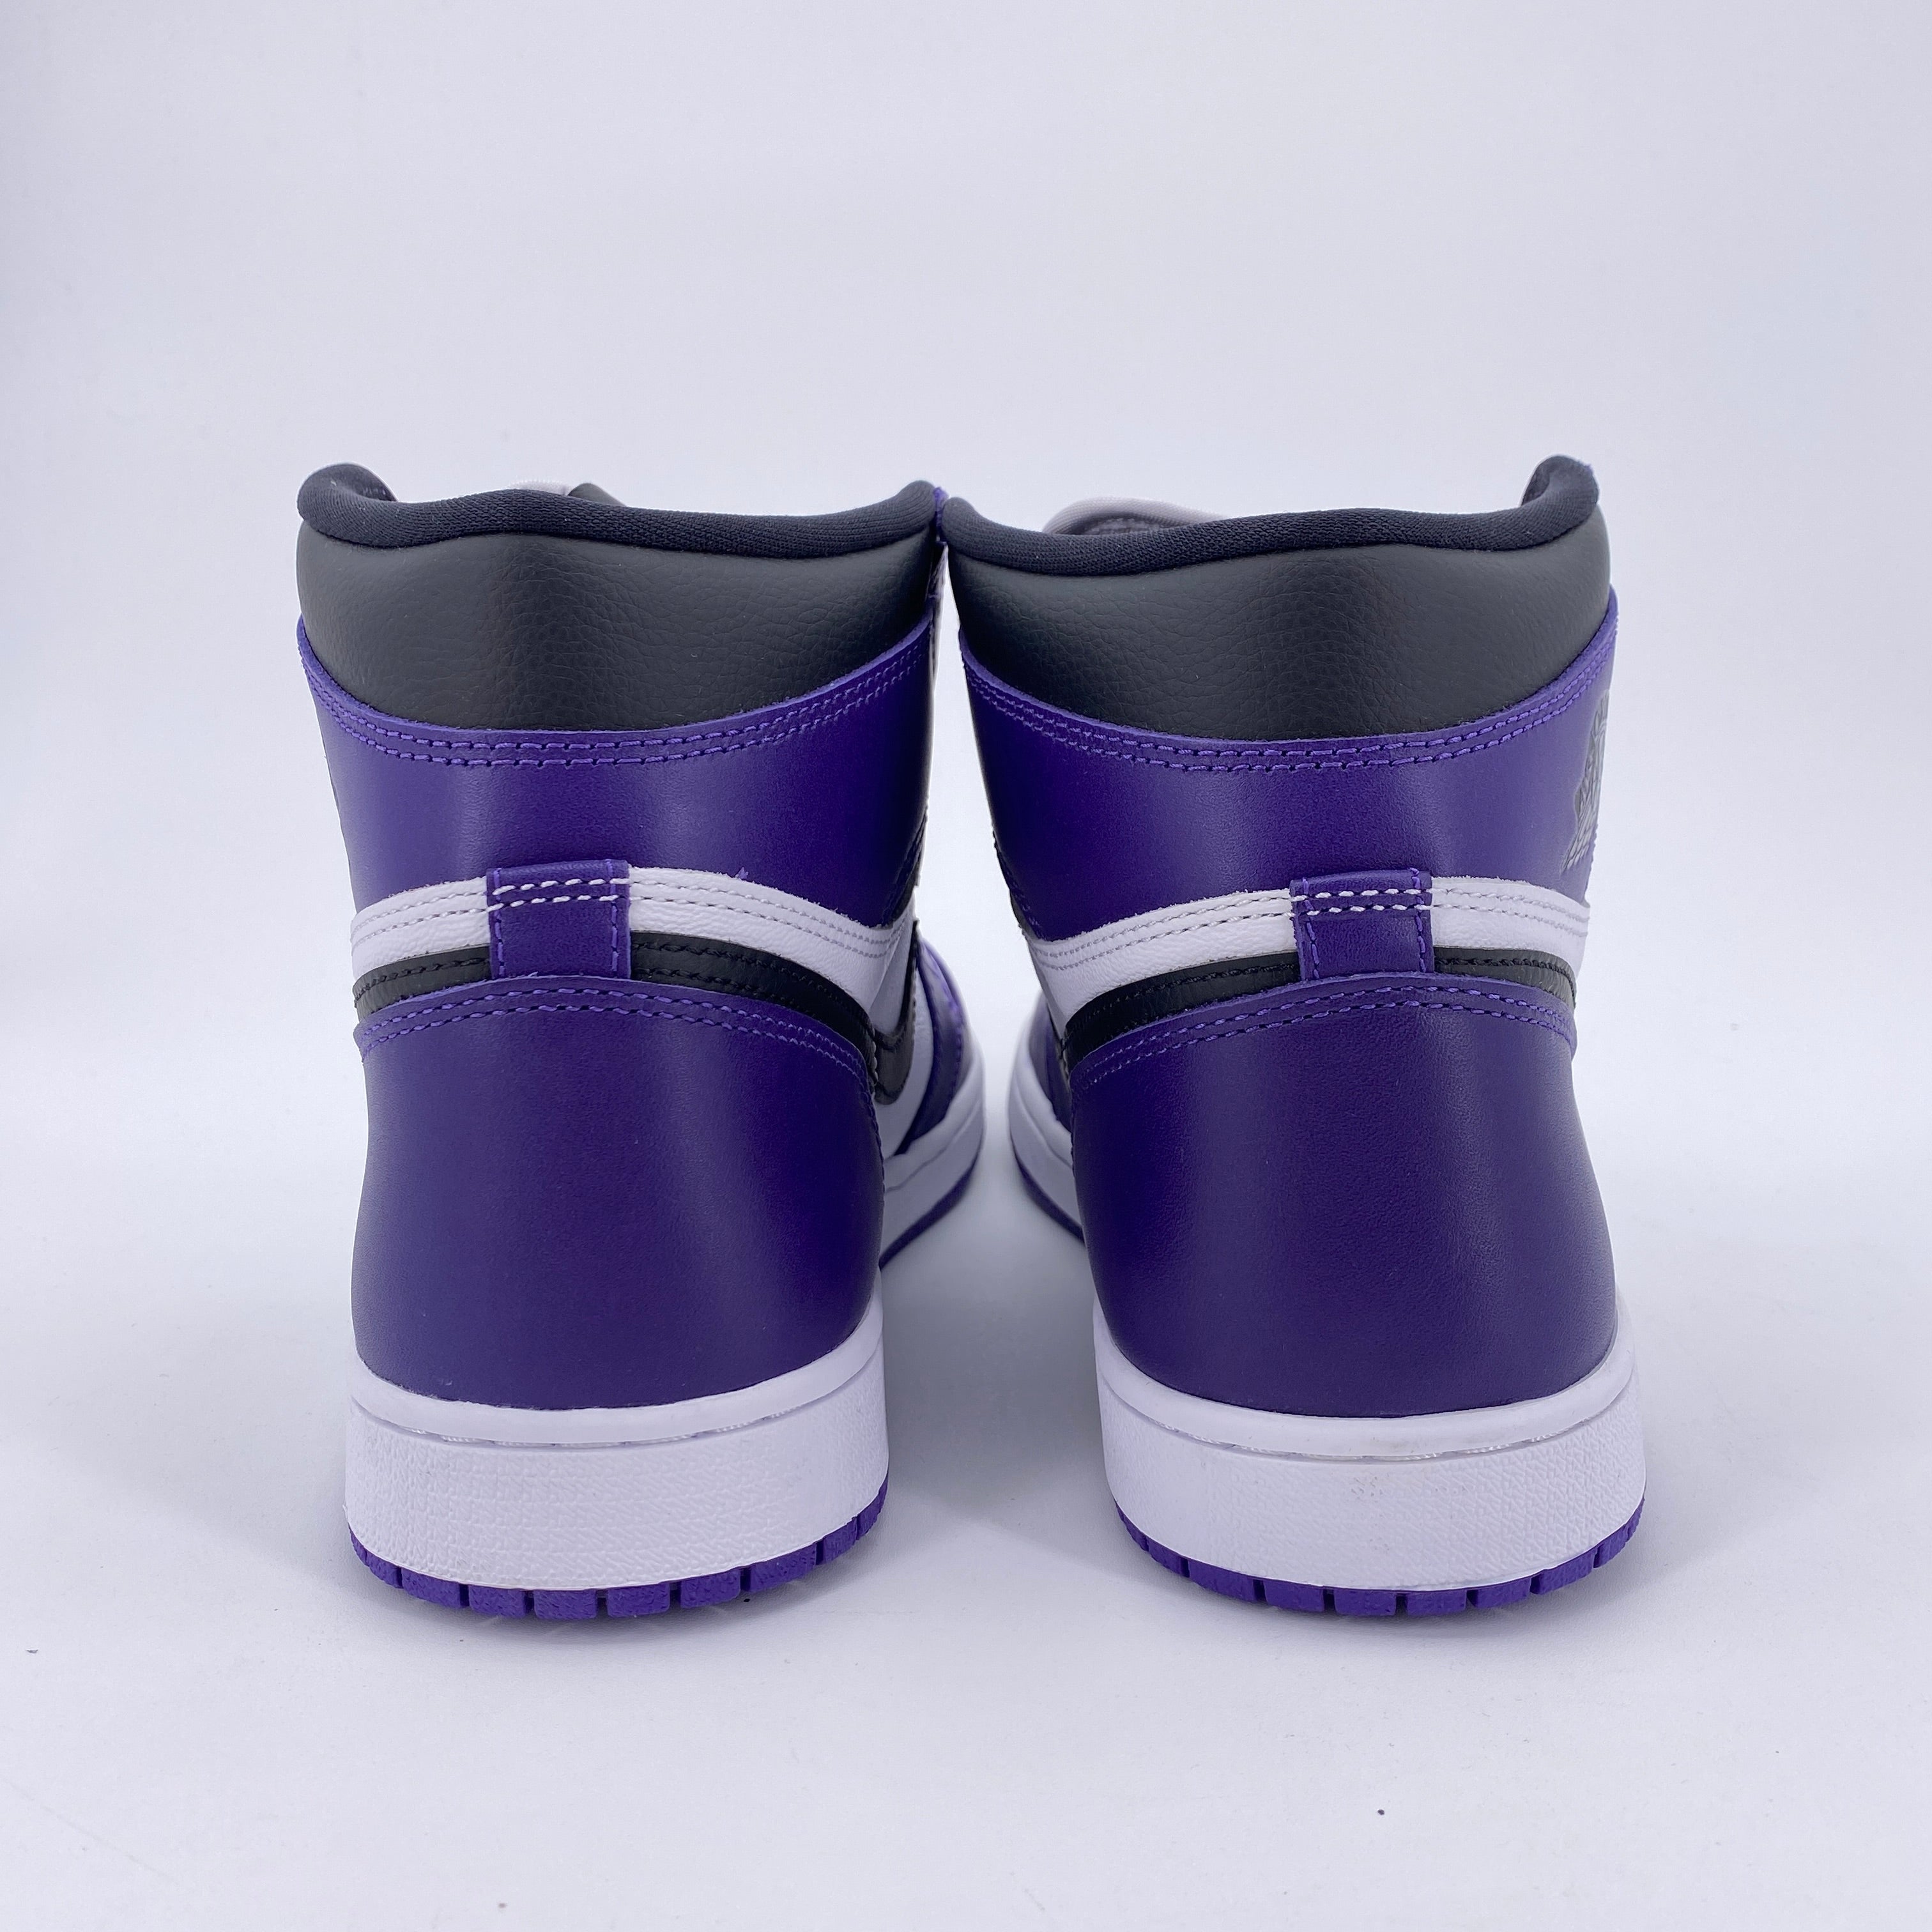 Air Jordan 1 Retro High OG "Court Purple 2.0" 2020 New (Cond) Size 11